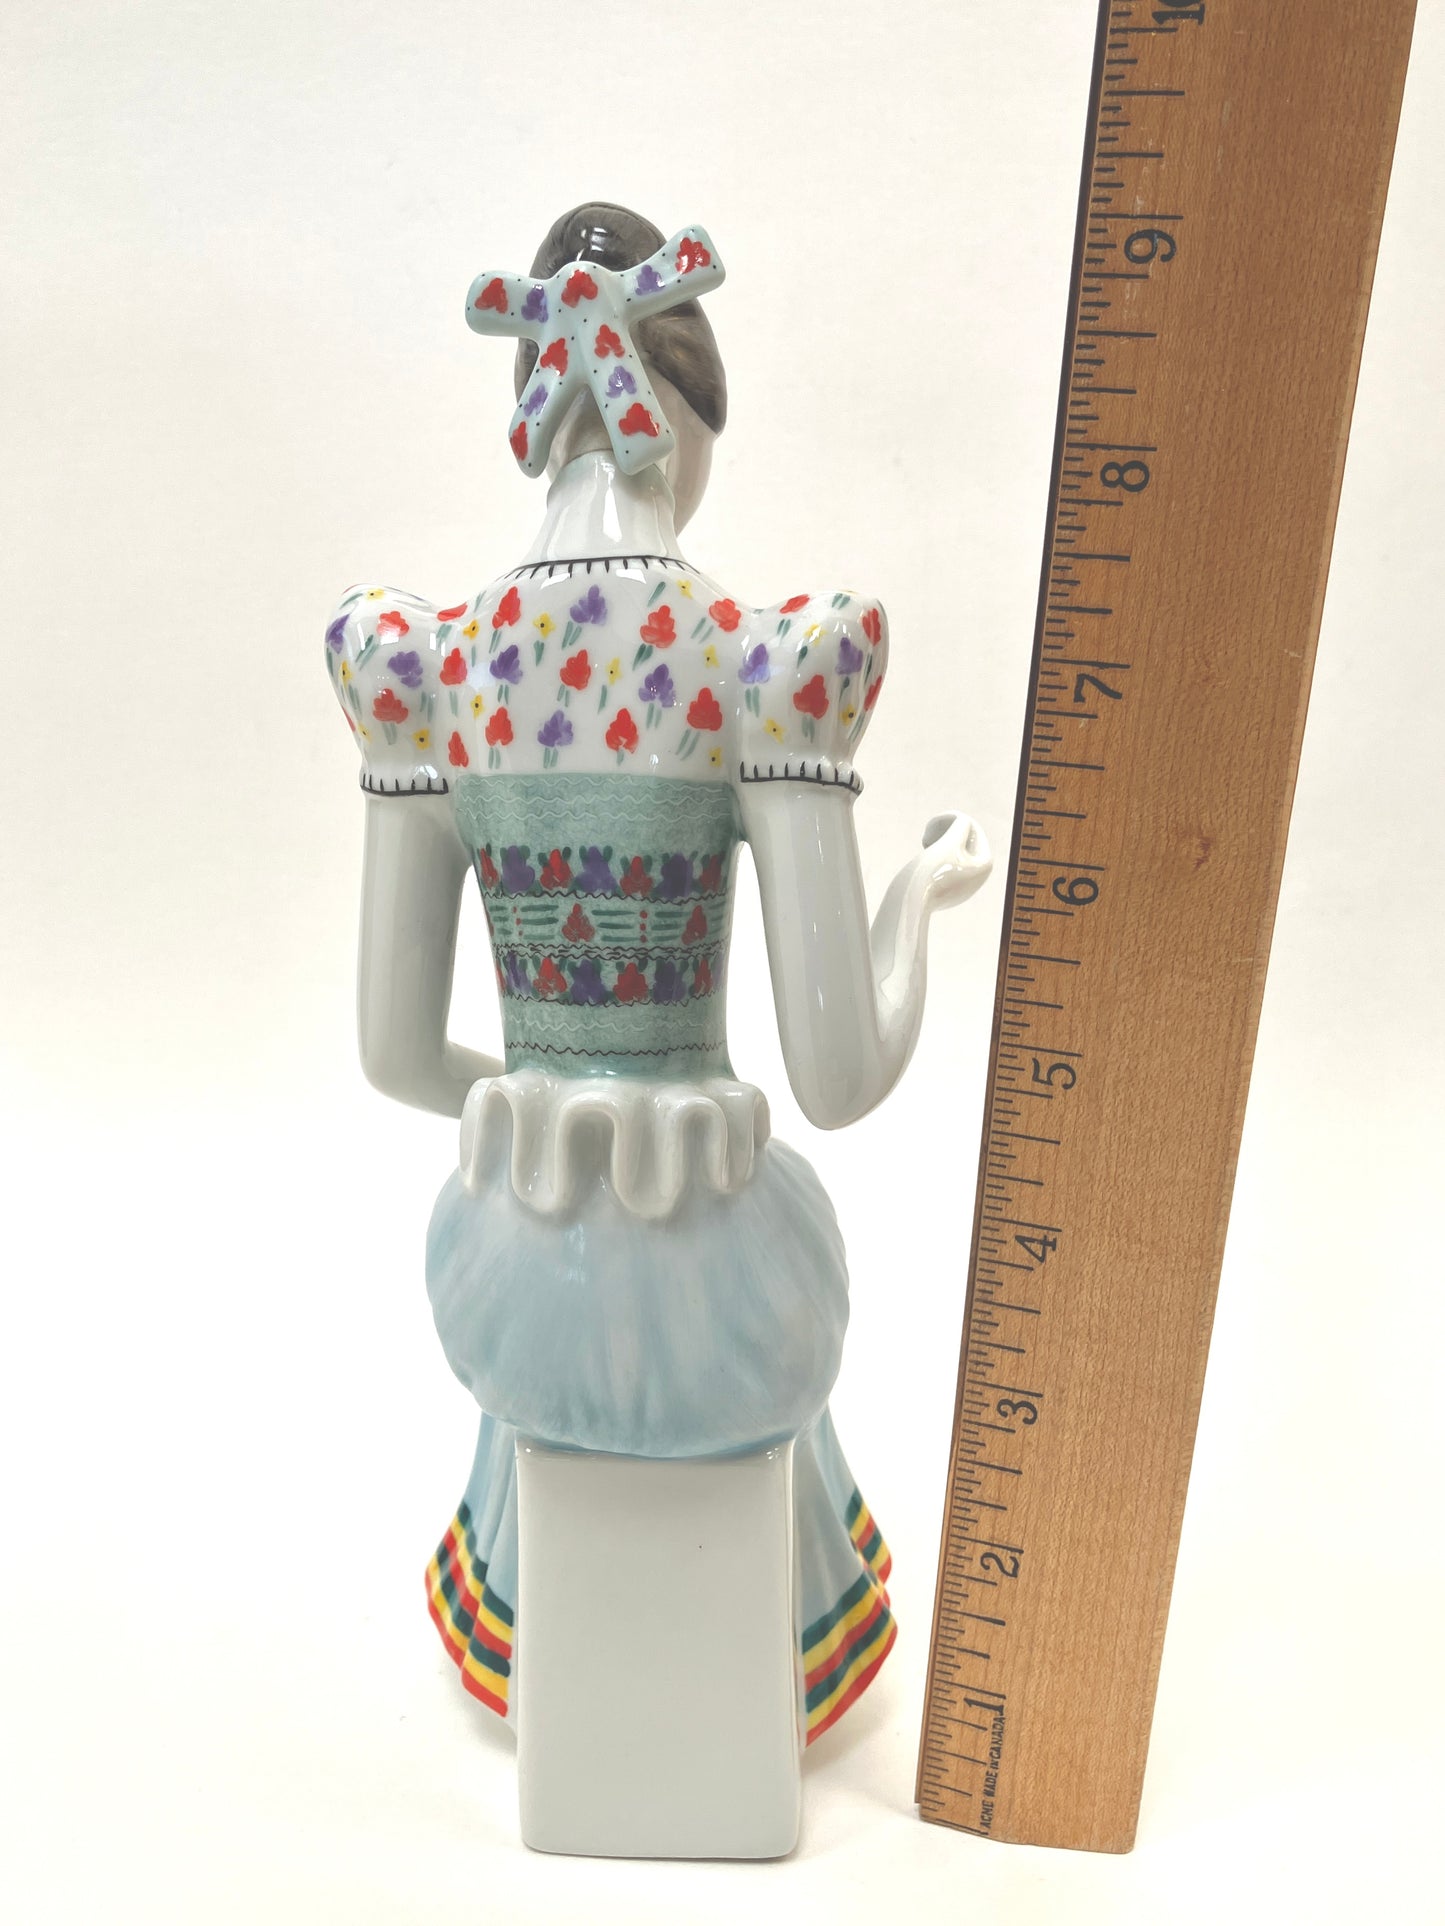 Hollohaza, Lady Sewing, Vintage, 1831, 3, 8065, Hand Painted, Figurine, Porcelain, Kezzel Festett